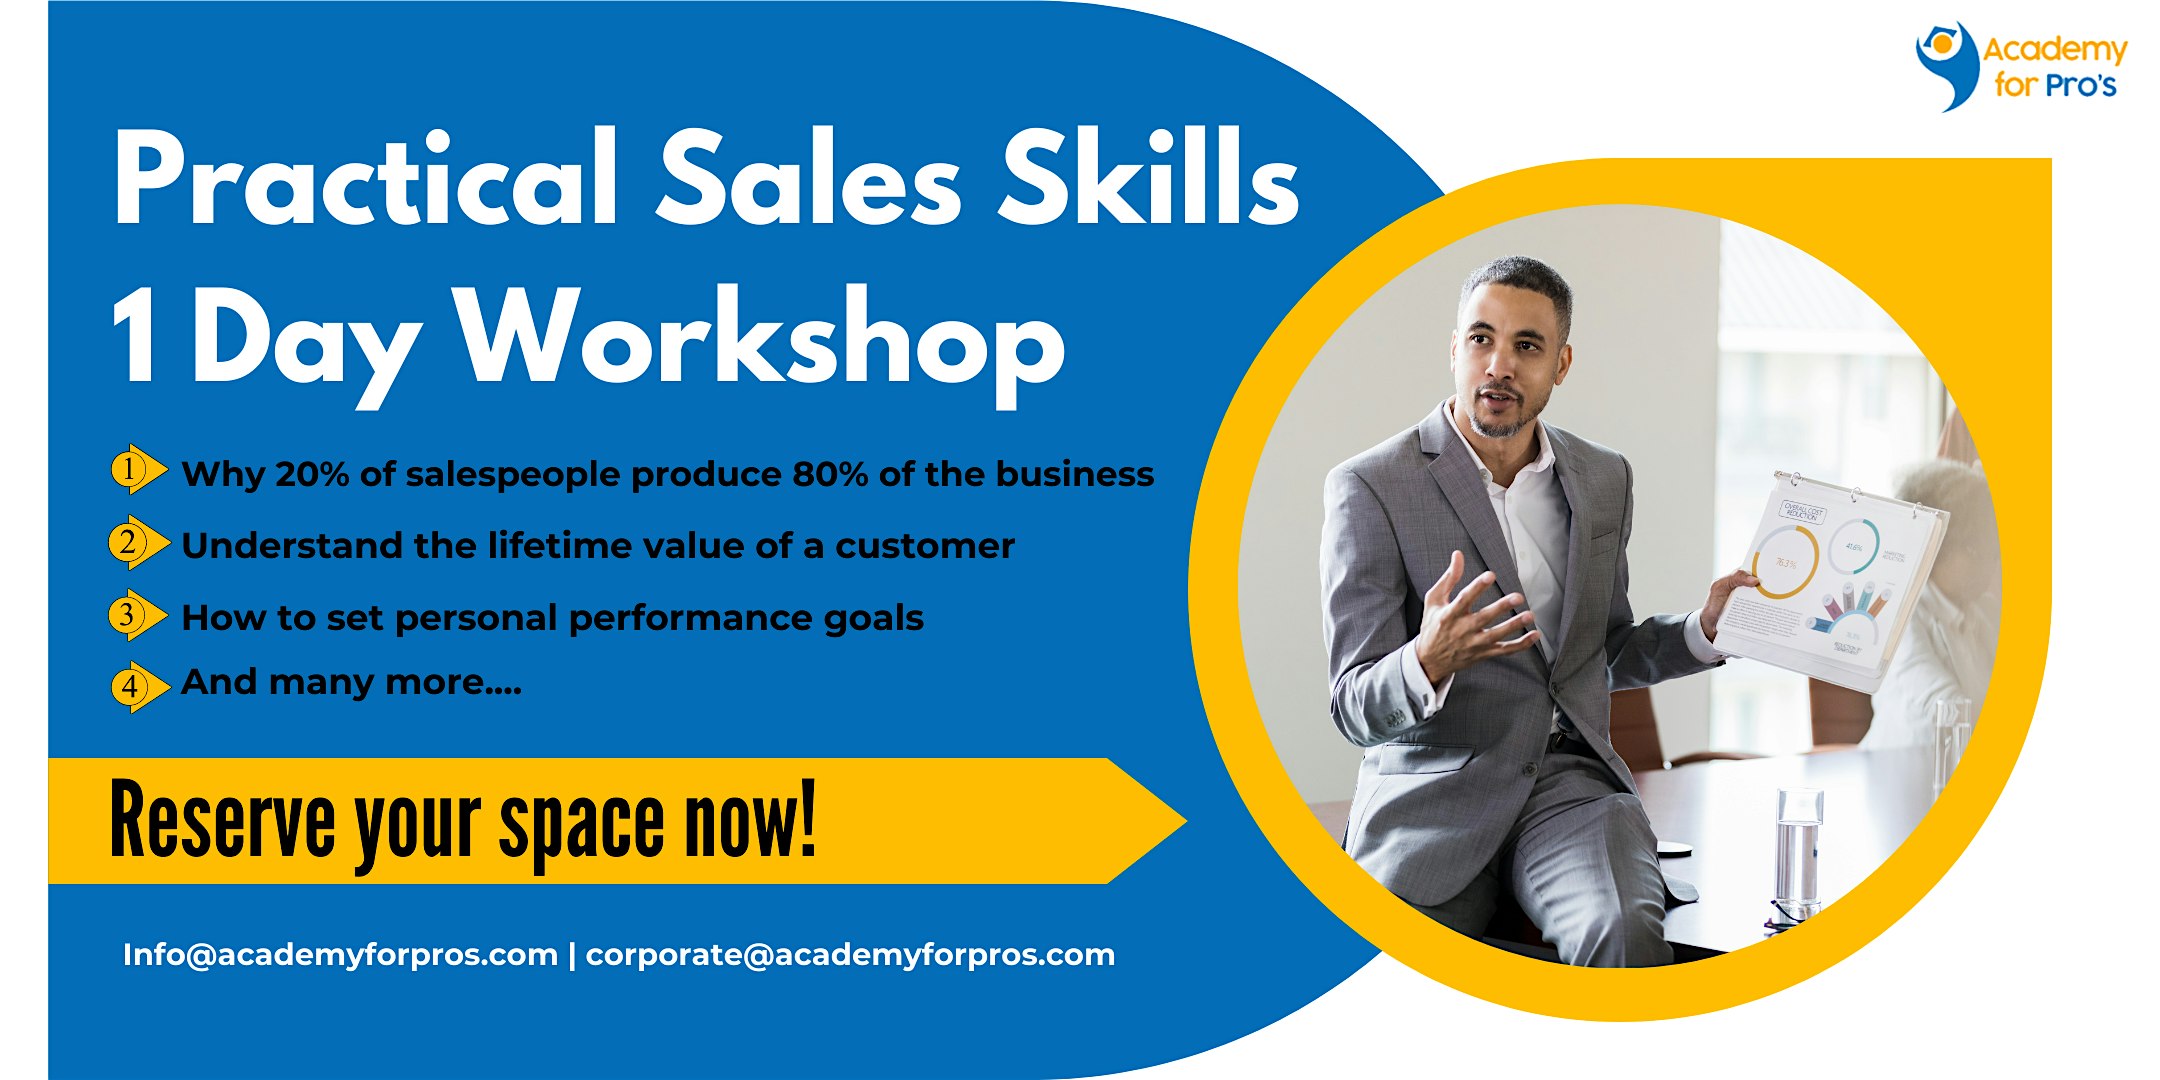 Practical Sales Skills 1-Day Workshop in Lansing, MI